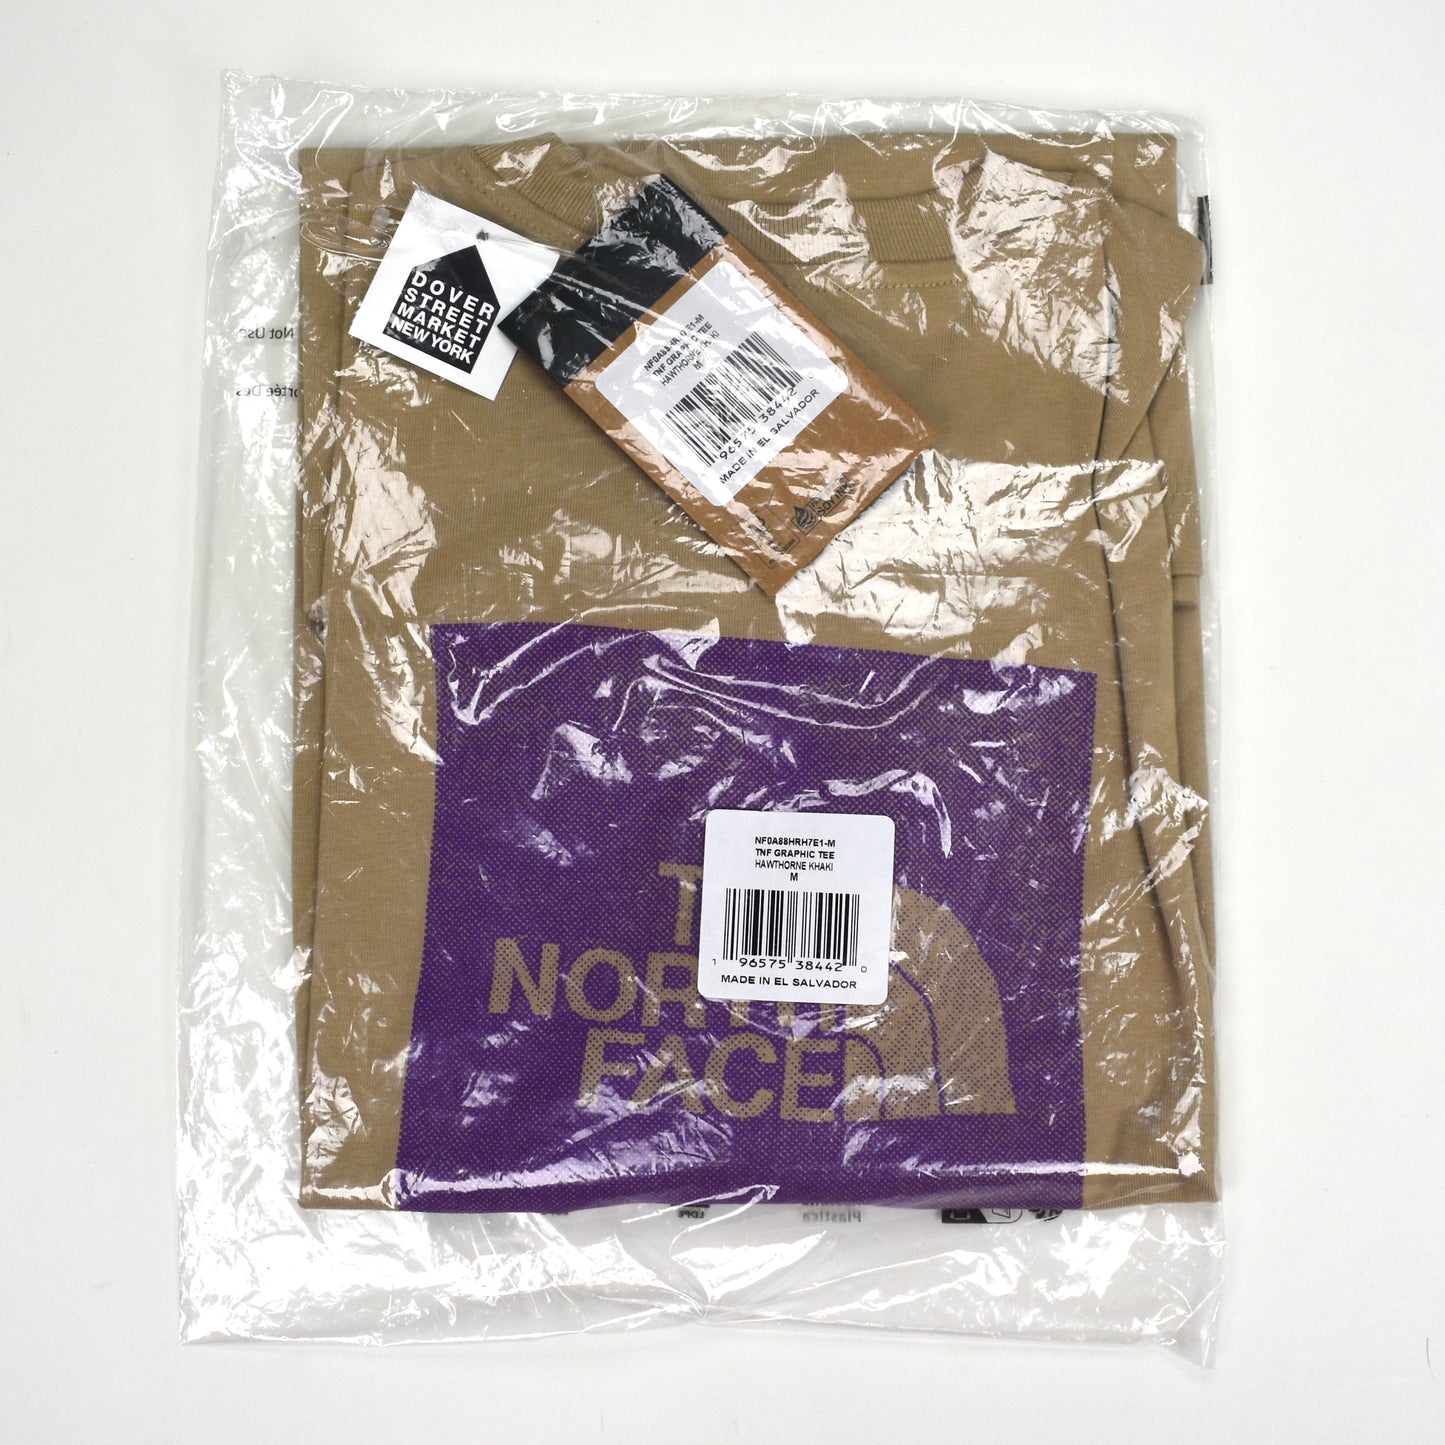 Supreme x The North Face - Back Logo Print T-Shirt (Tan)